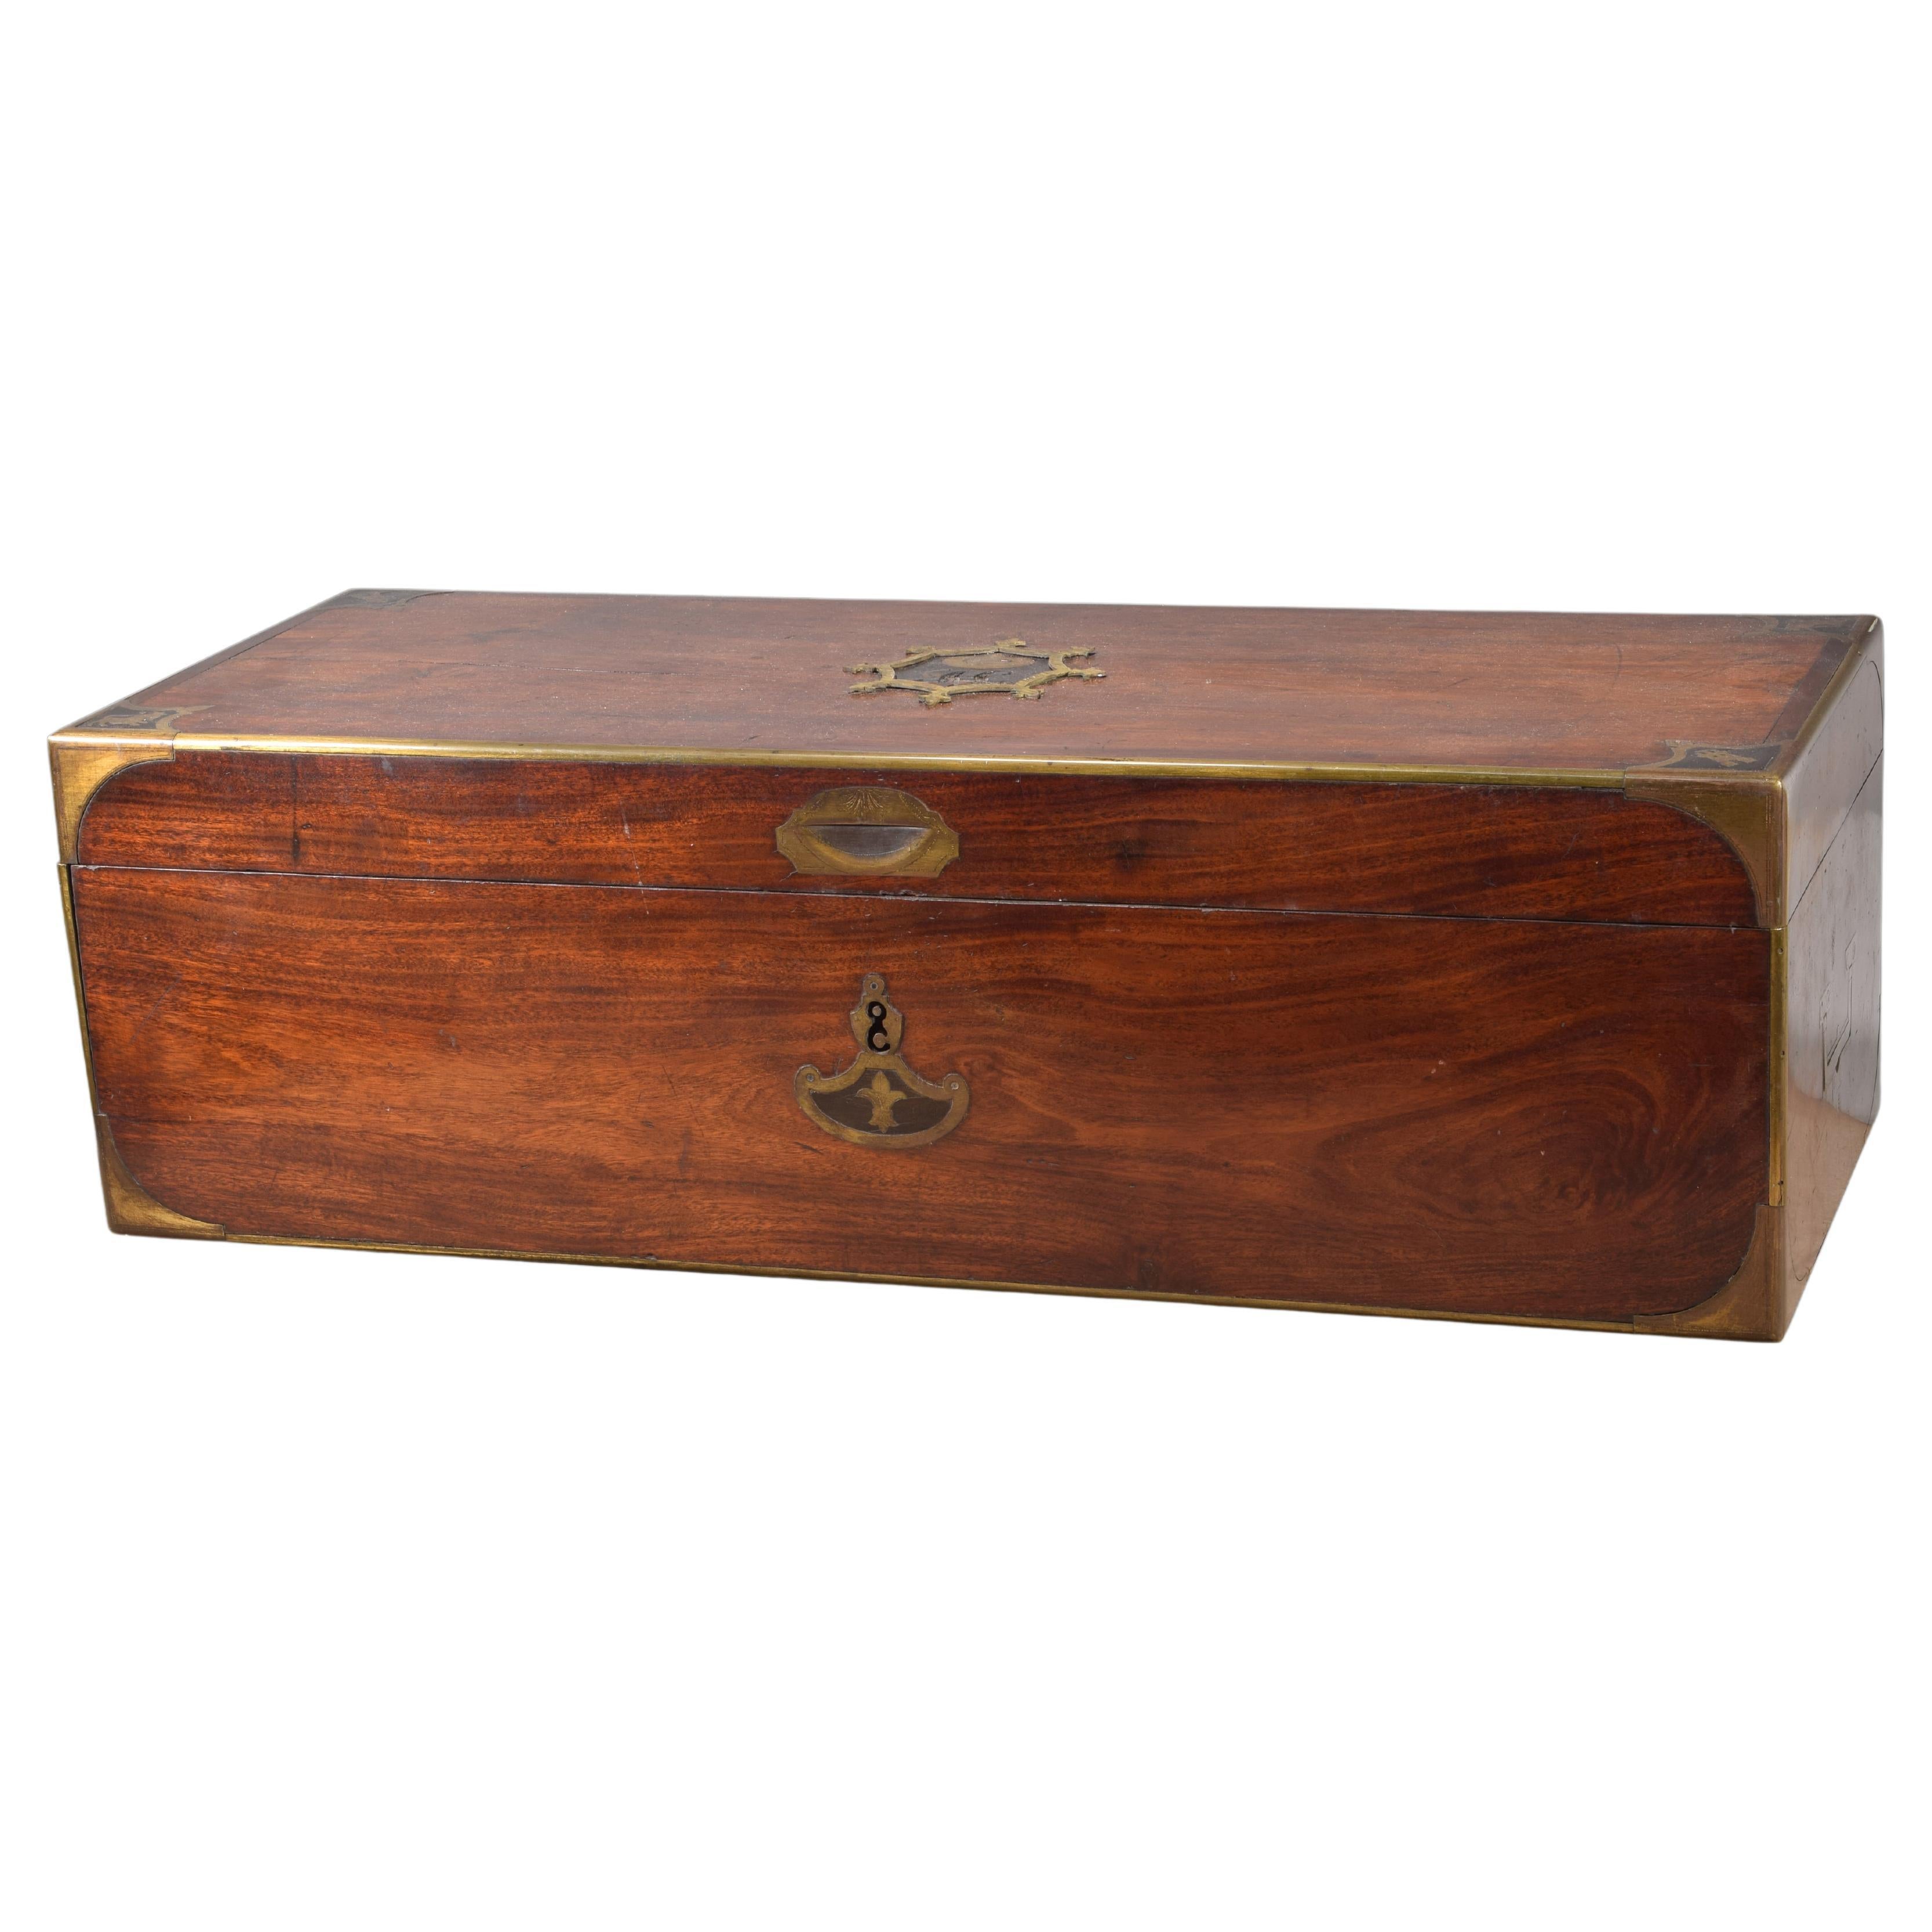 Box or casket with royal monogram. Mahogany wood, metal. Spain, 19th century.